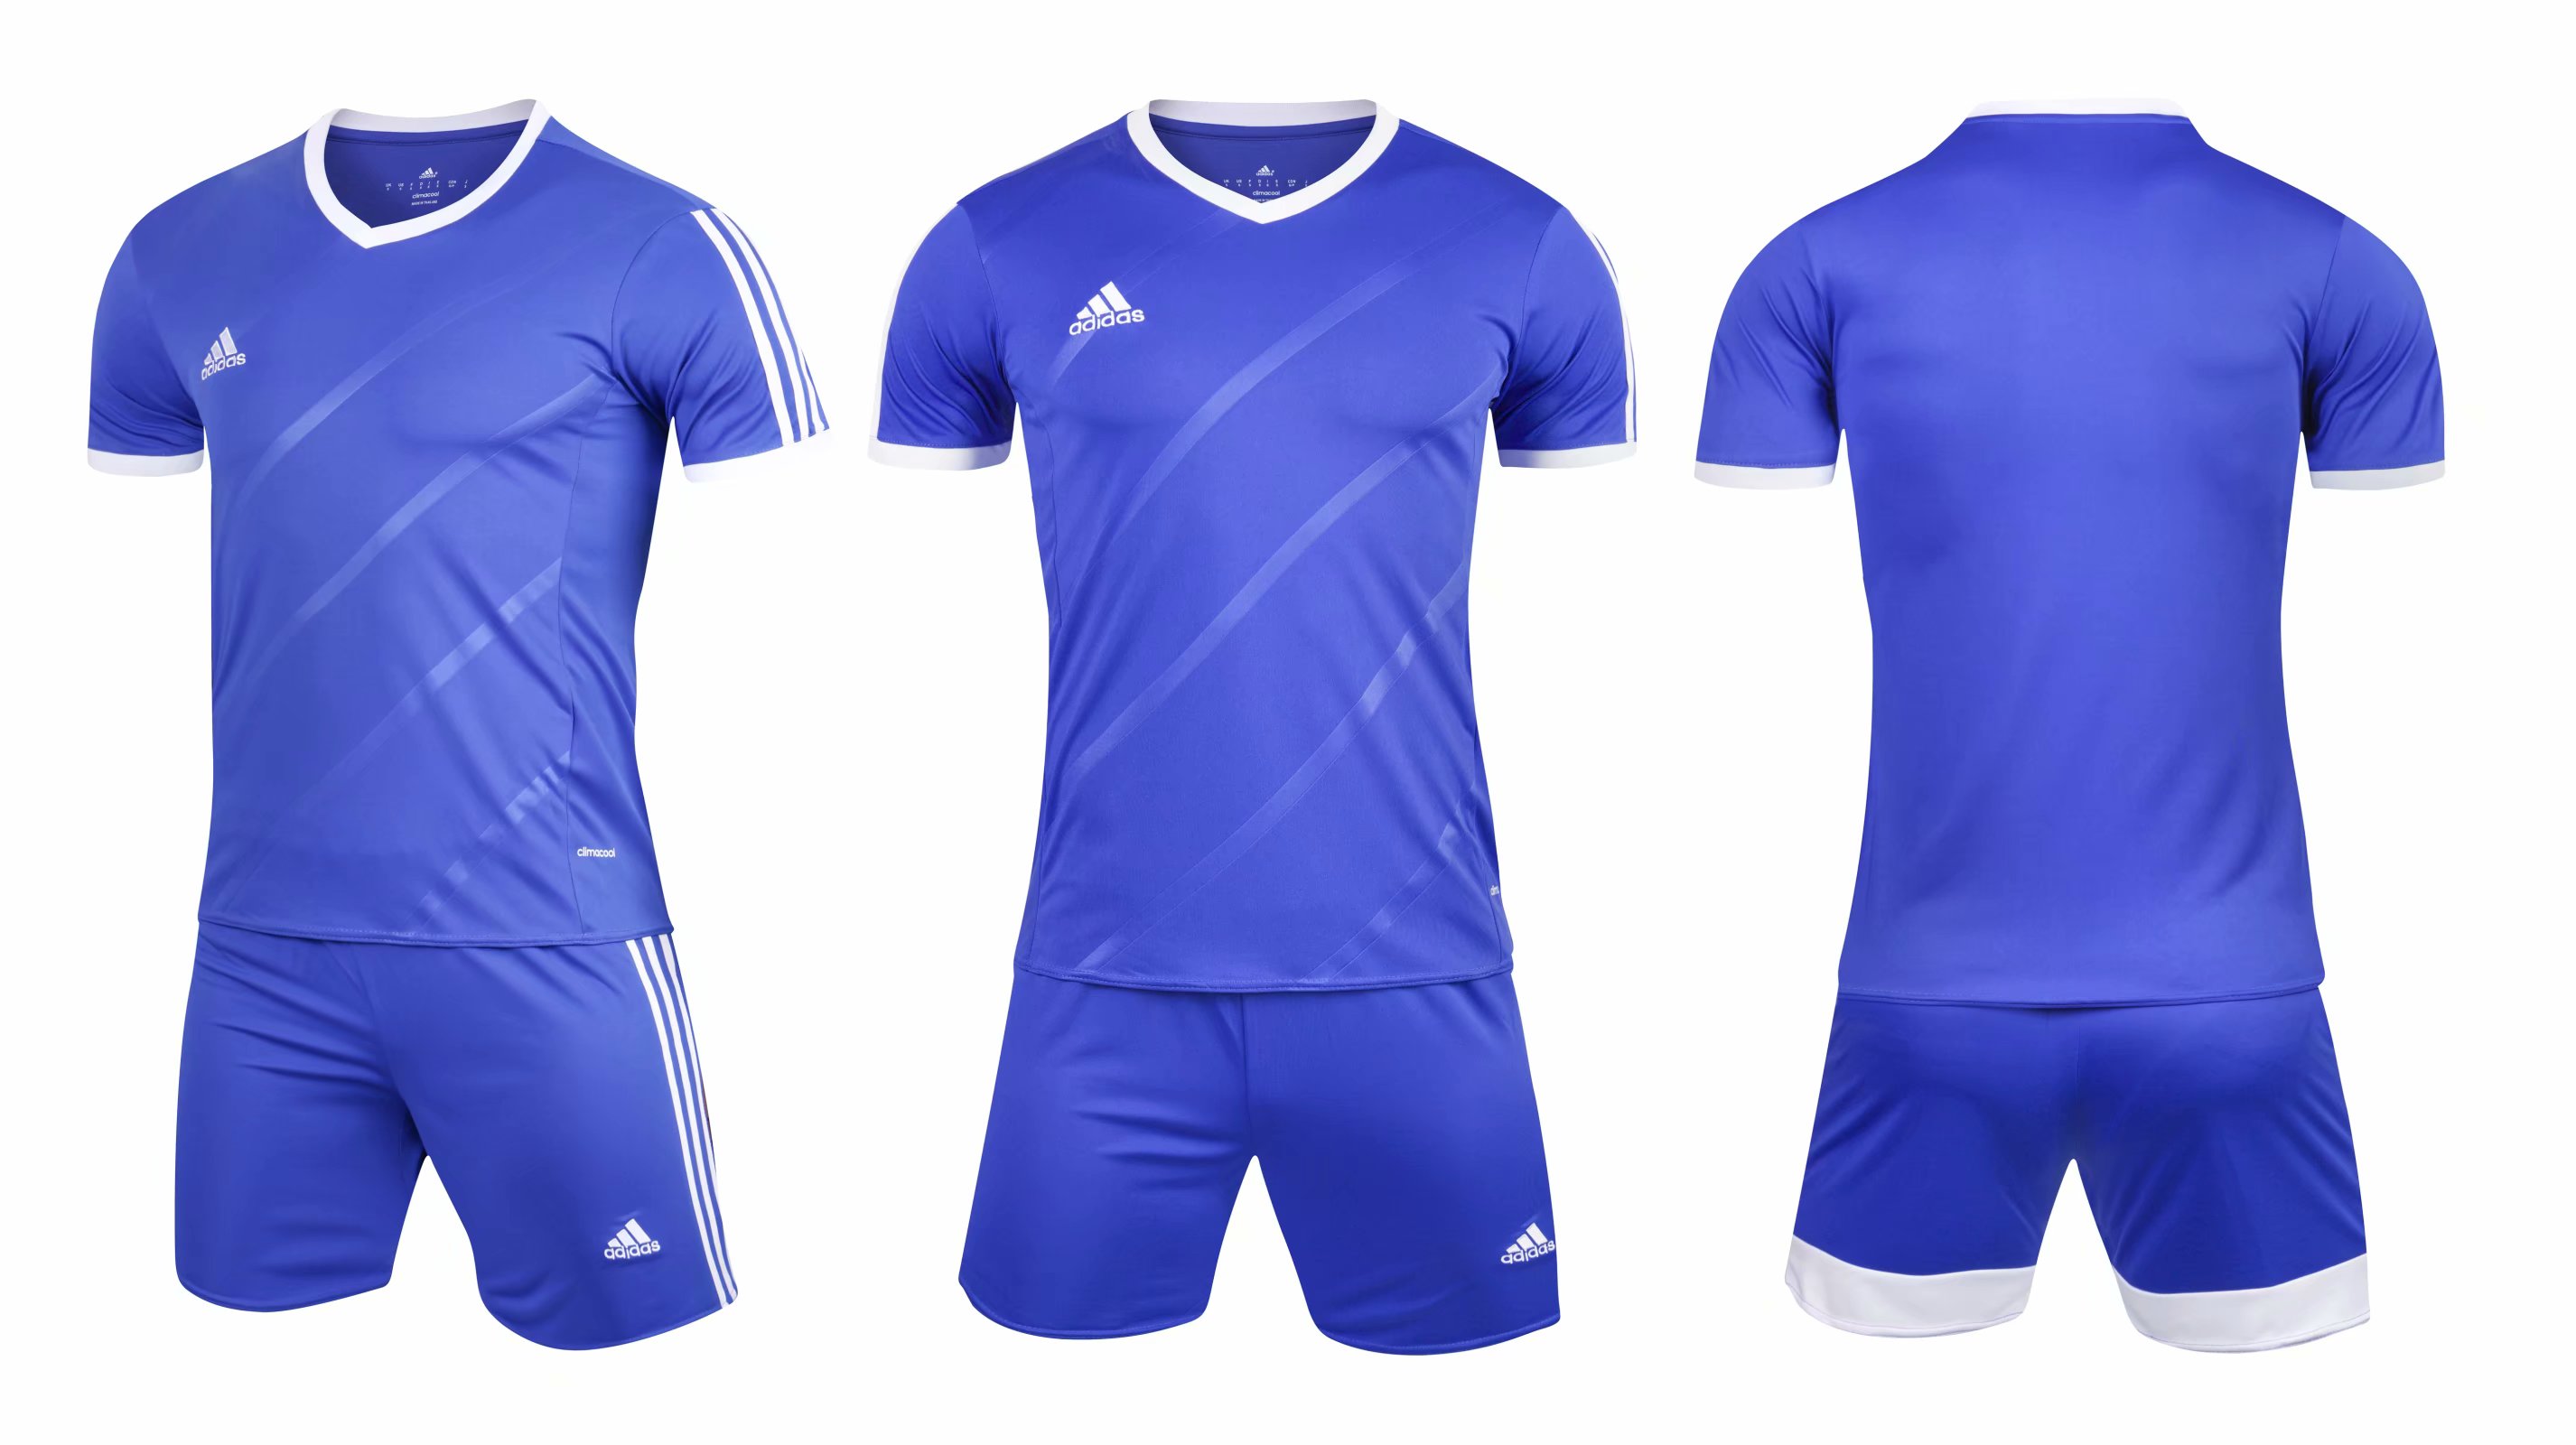 Adidas Soccer Team Uniforms 035